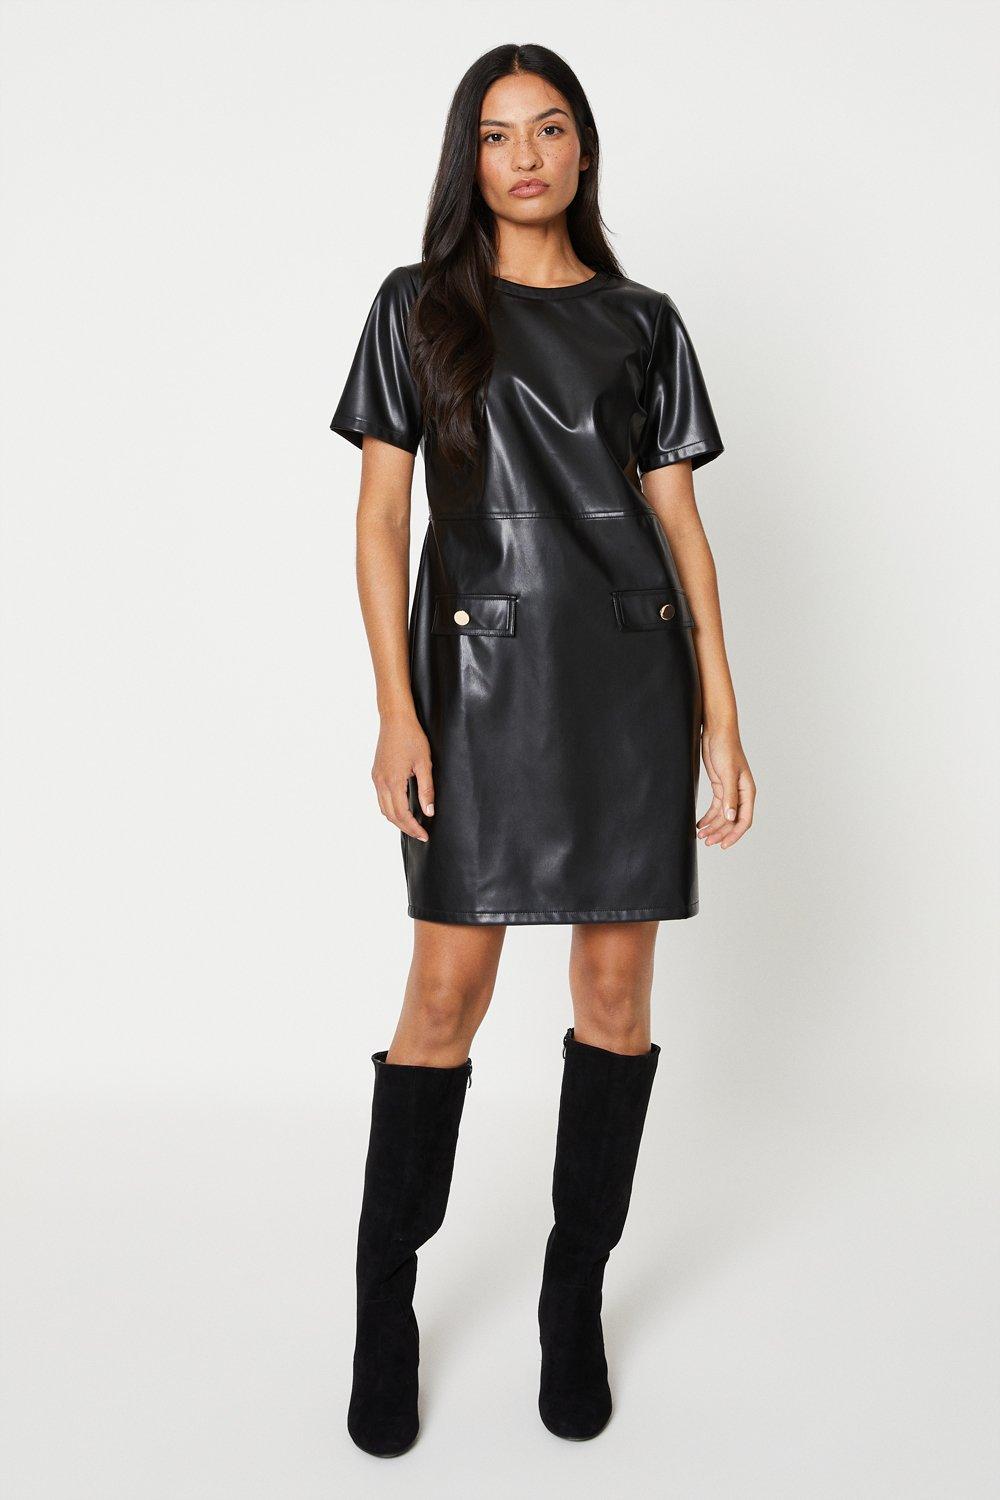 Women’s Short Sleeve Pocket Front Pu Dress - black - 14